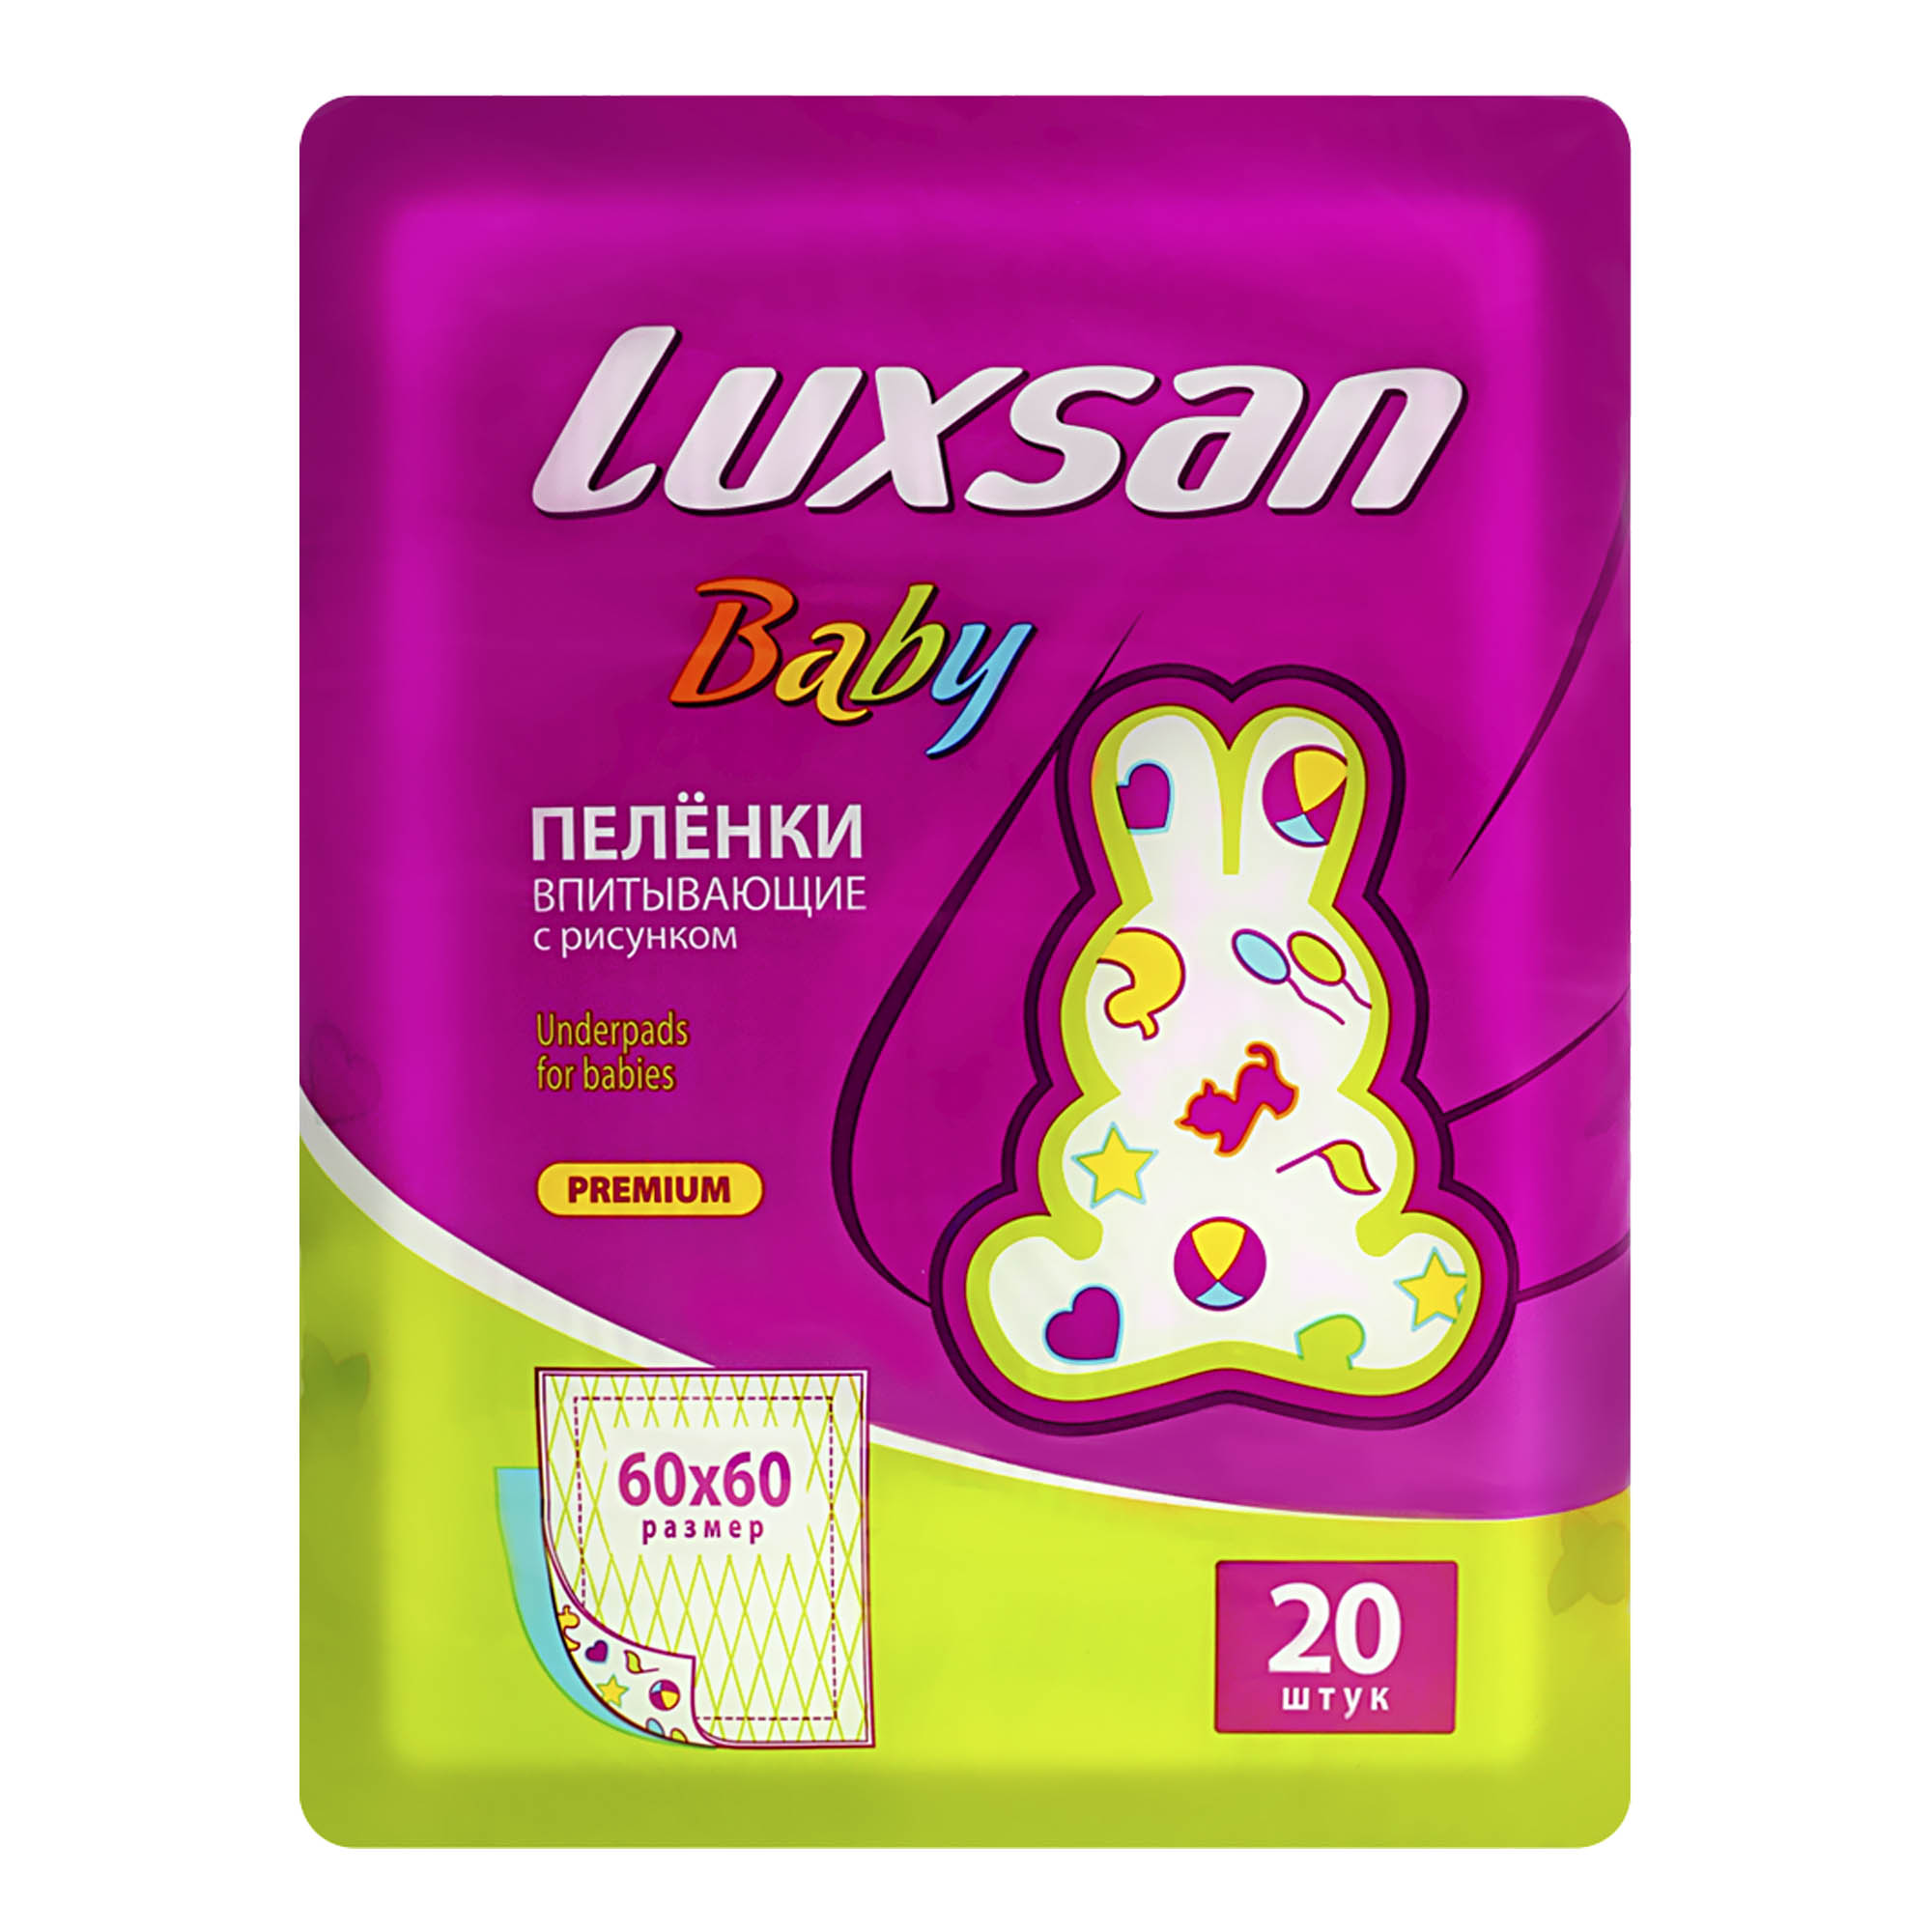 Пеленки впитывающие Luxsan Baby с рисунком 60х60 20 шт - фото 1